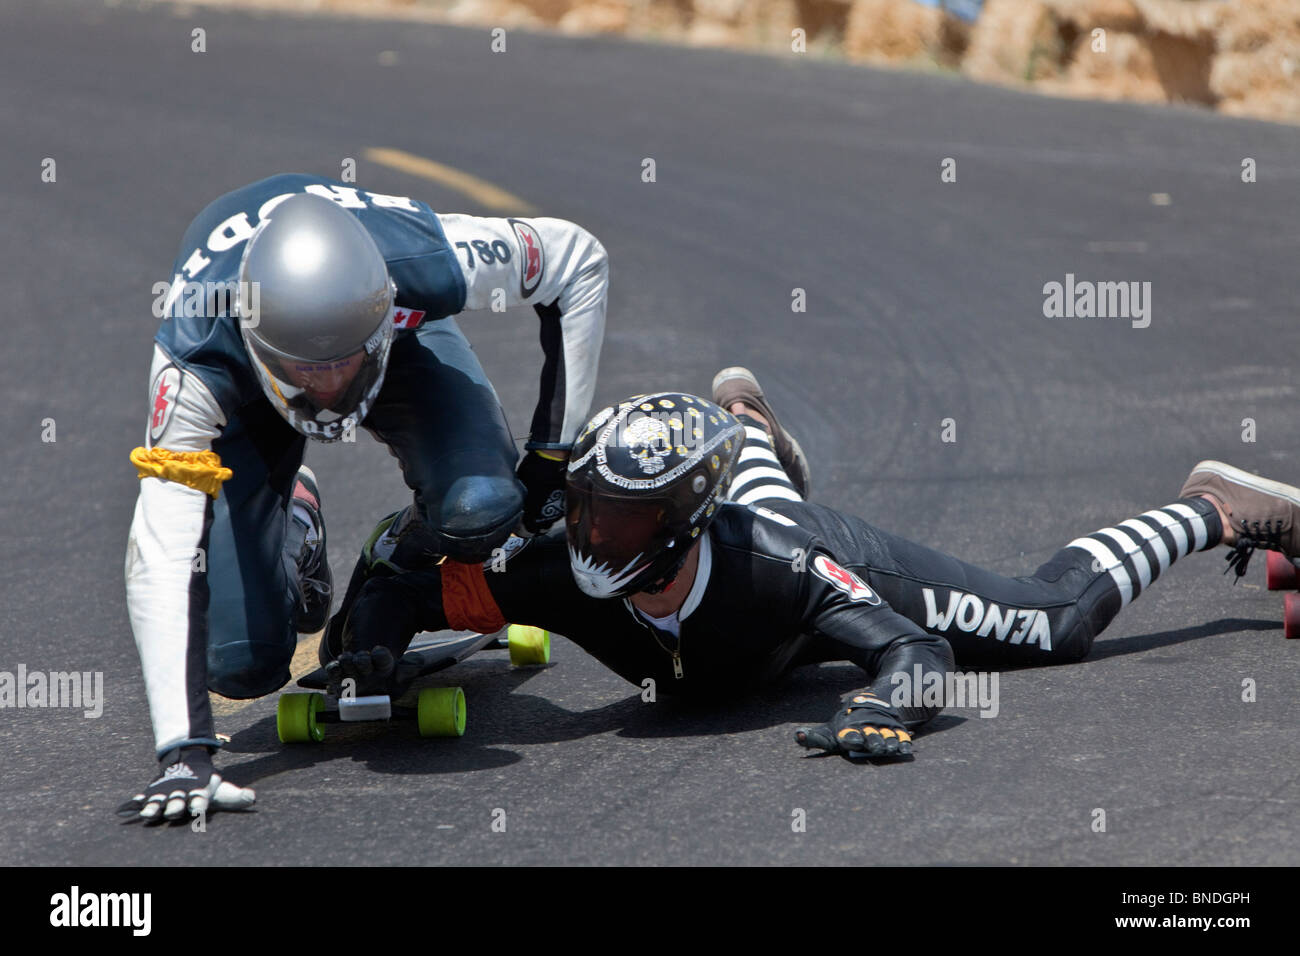 Skateboarders crashing, IGSA World Cup Series. Stock Photo